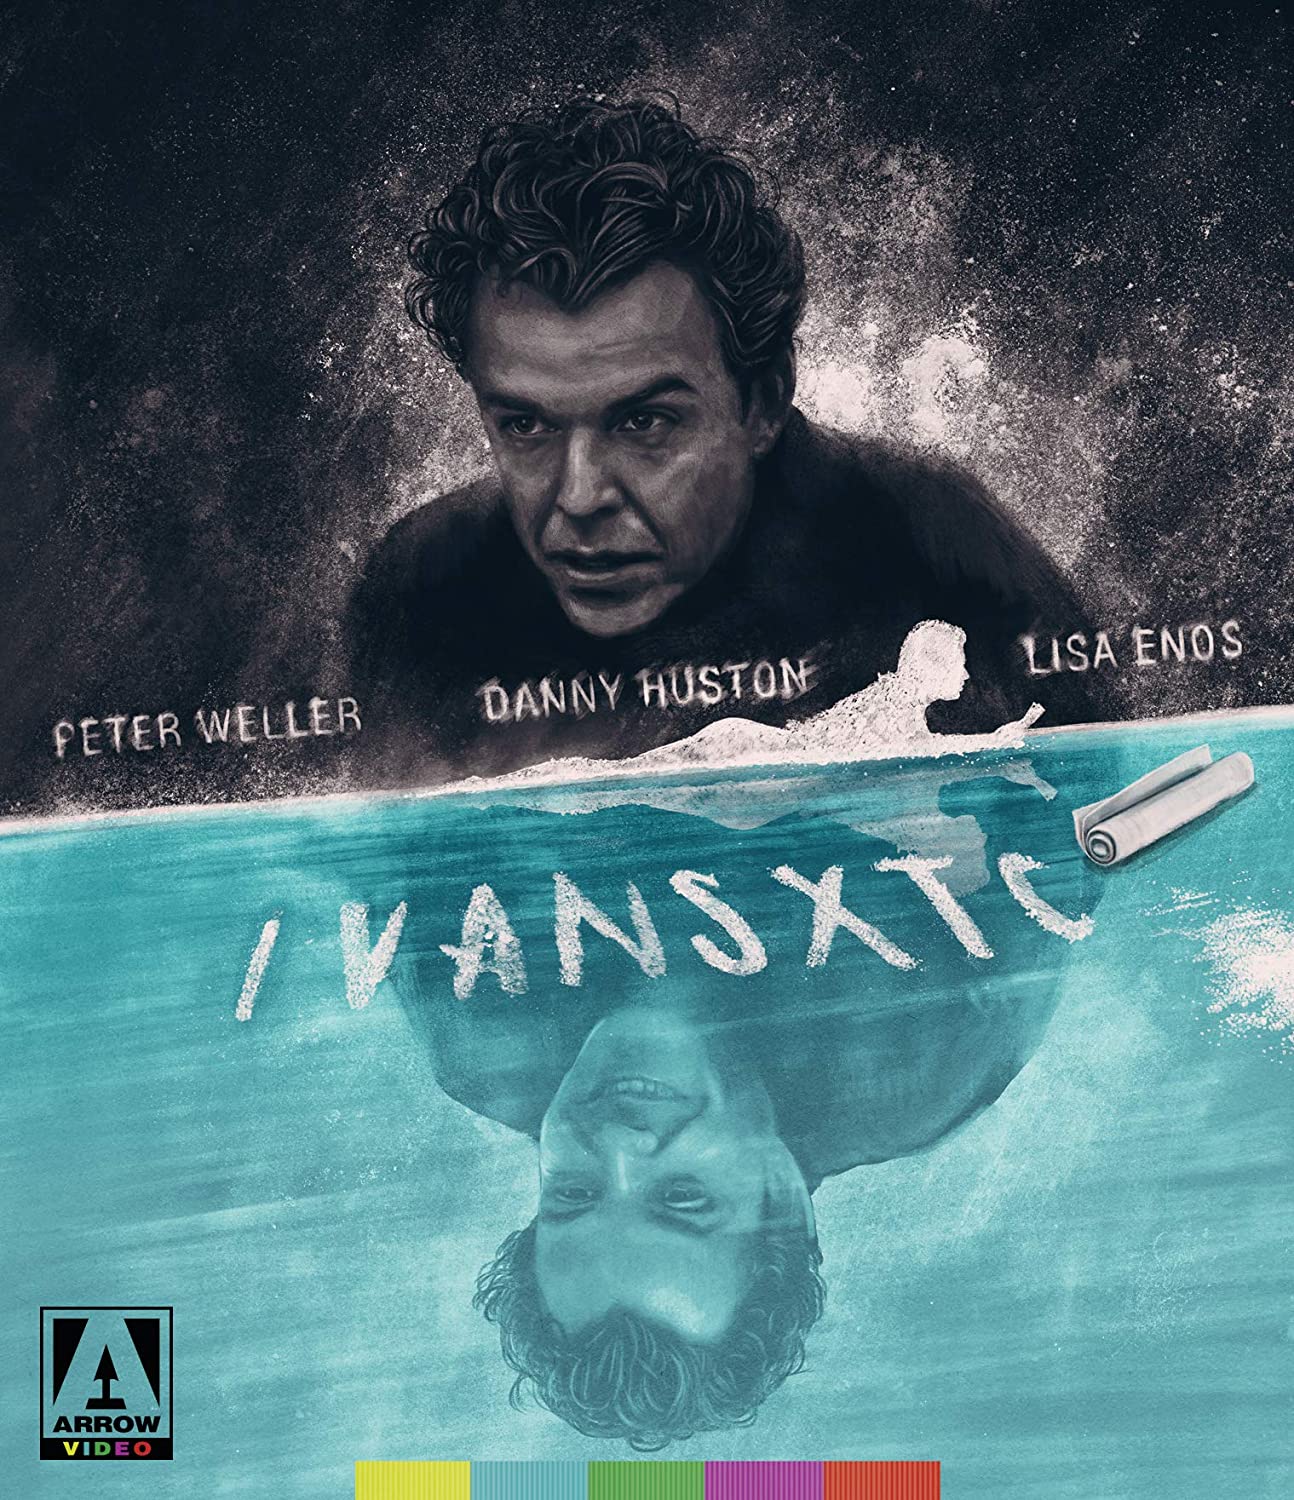 Blu-ray: Ivans xtc